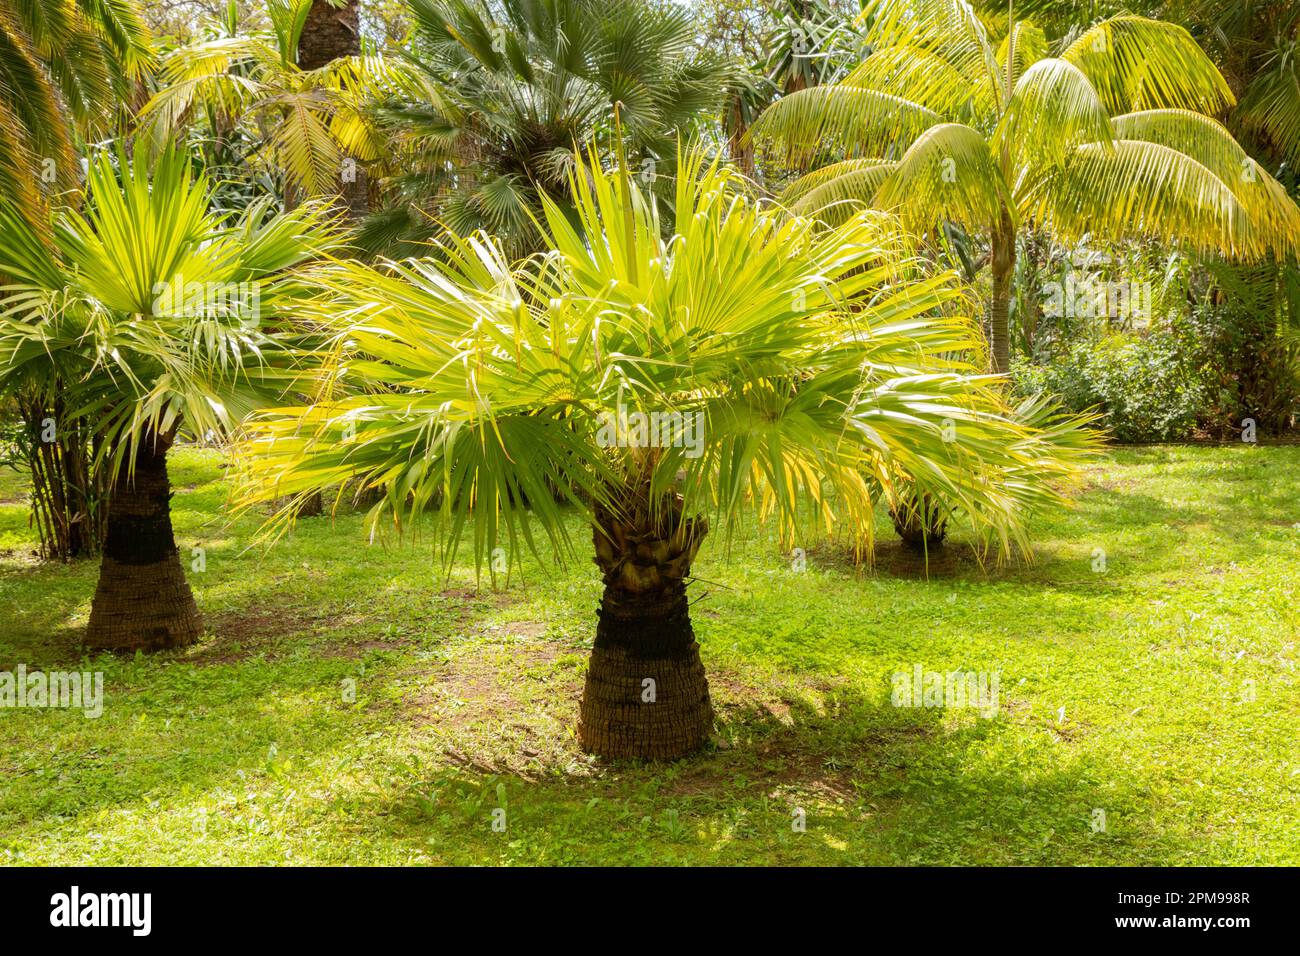 Madeira Botanical gardens with palm trees Stock Photo